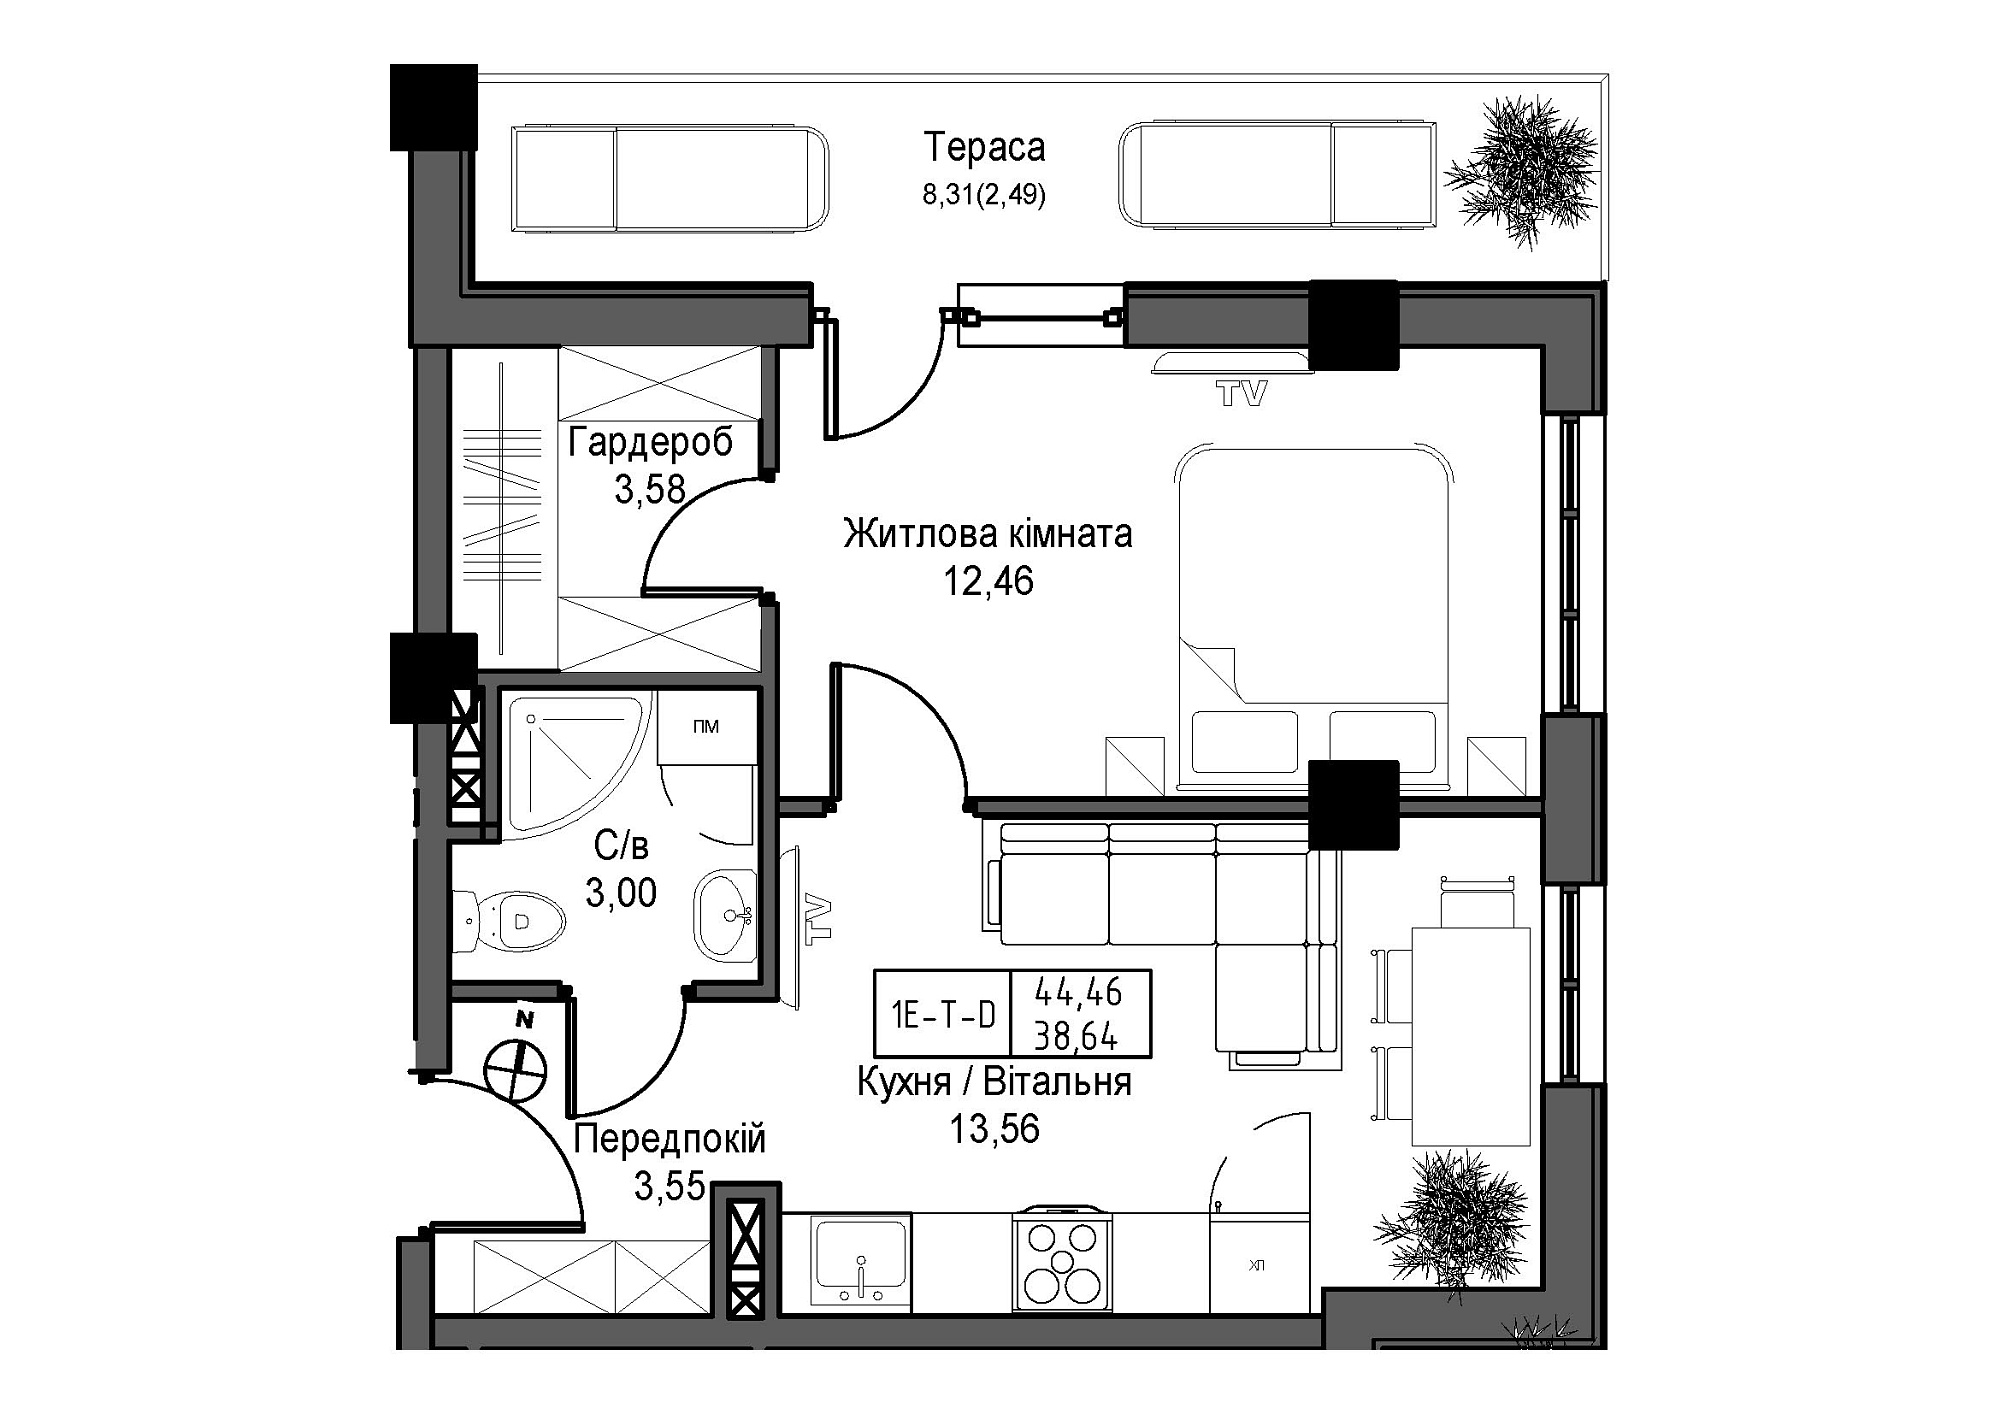 Планування 1-к квартира площею 38.64м2, UM-007-12/0003.